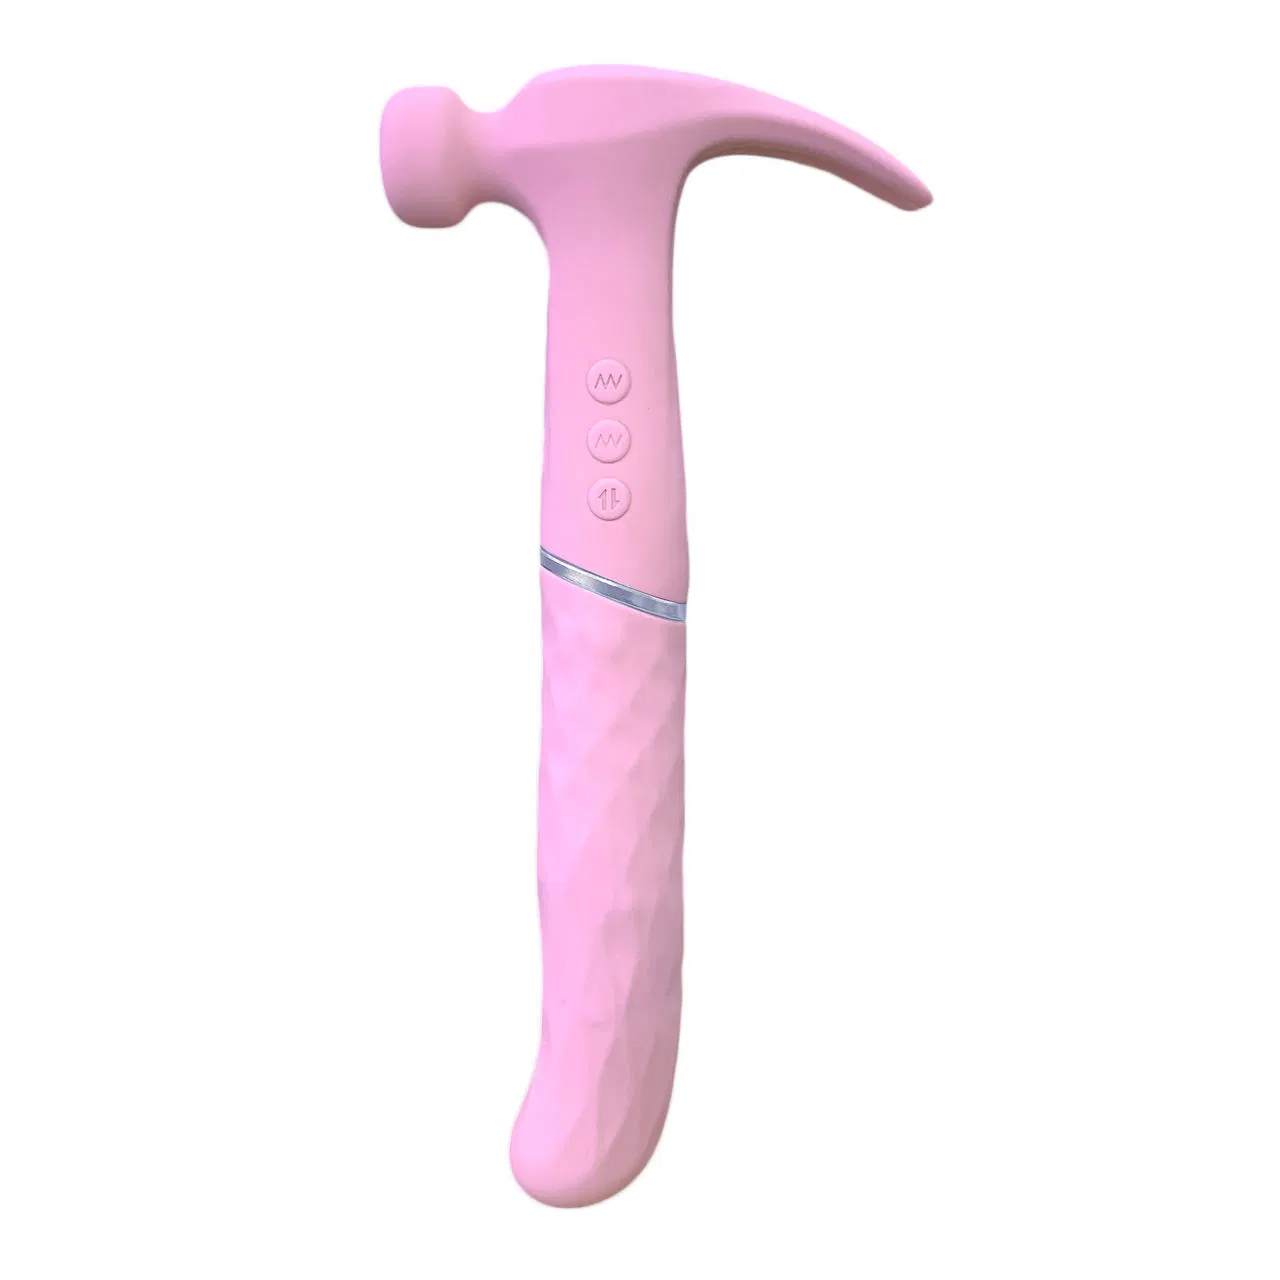 2022 Sexo Mujer adulta consolador tienda de juguetes sexuales el martillo vibrador Vibrador Sex Toy